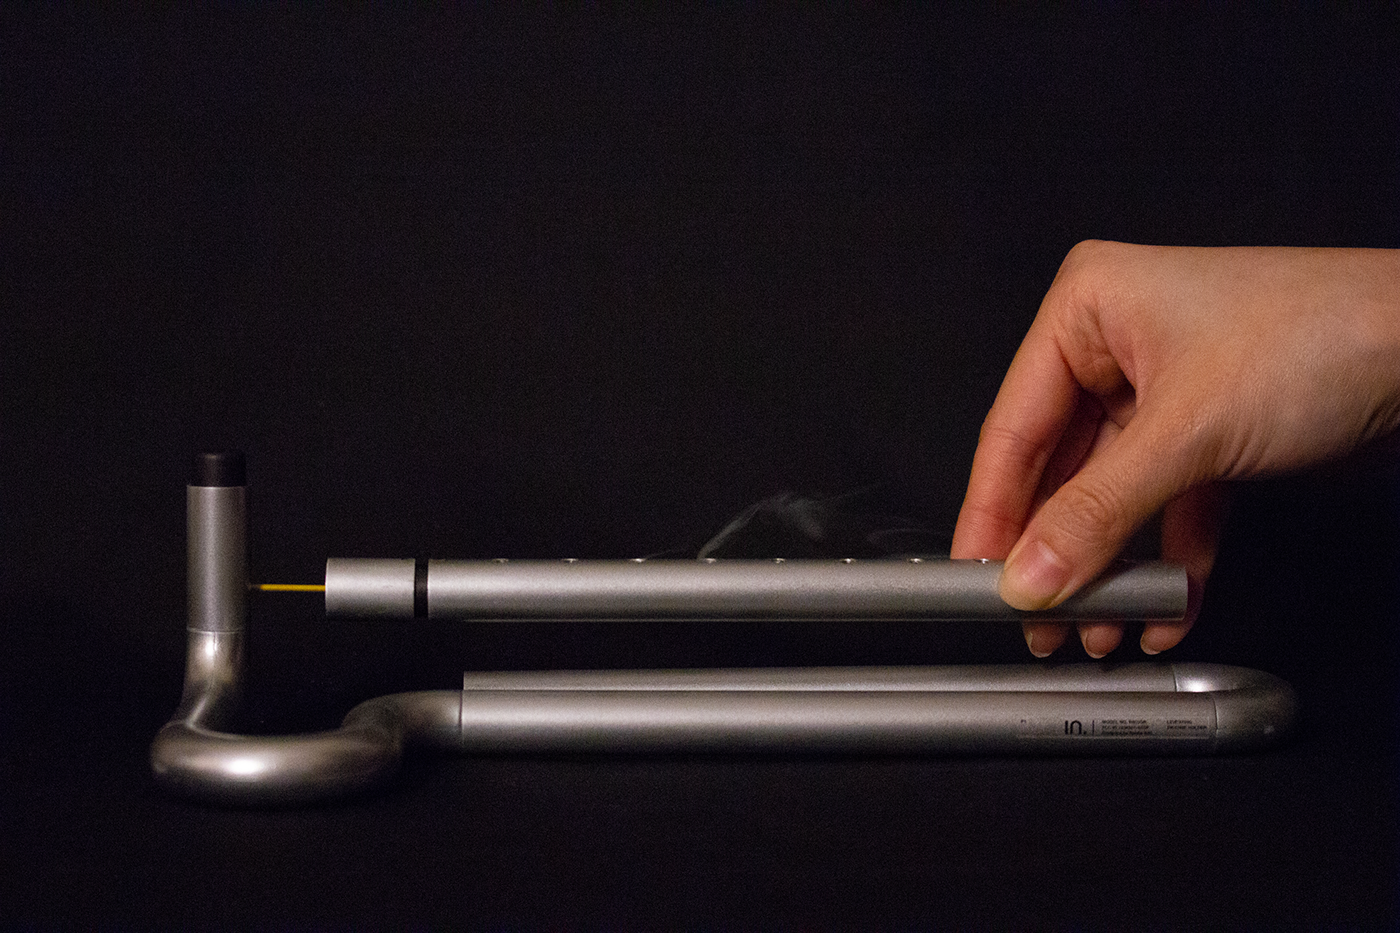 Incense minimal simple modeling chrome Mockup smoke magnet levitating concept